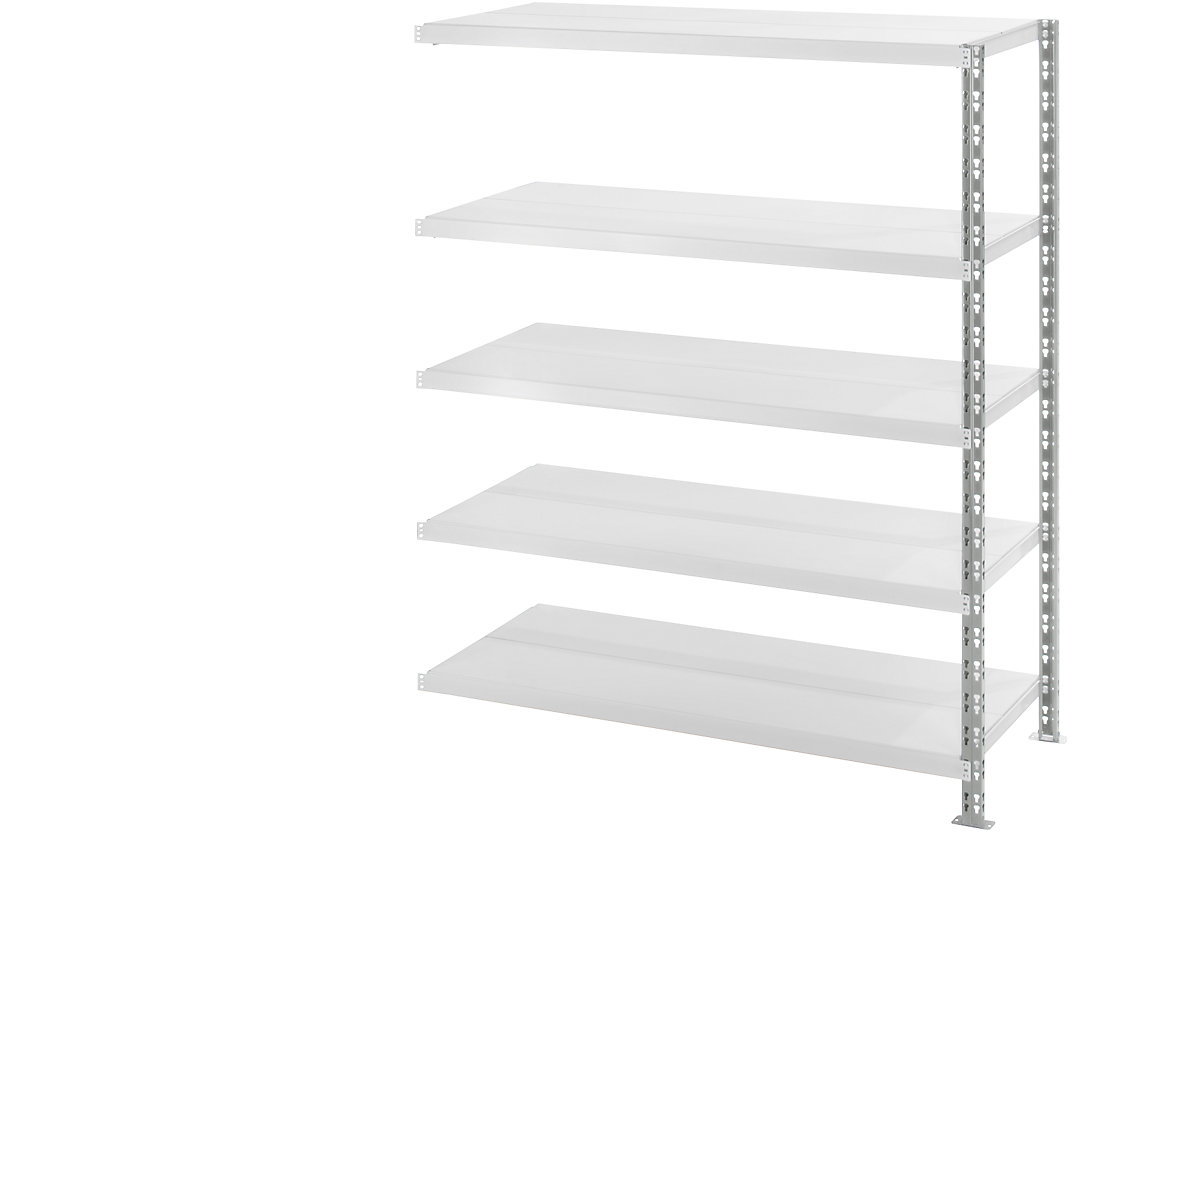 Wide span shelf unit with sheet steel shelves, depth 600 mm, extension shelf unit, HxW 1820 x 1525 mm